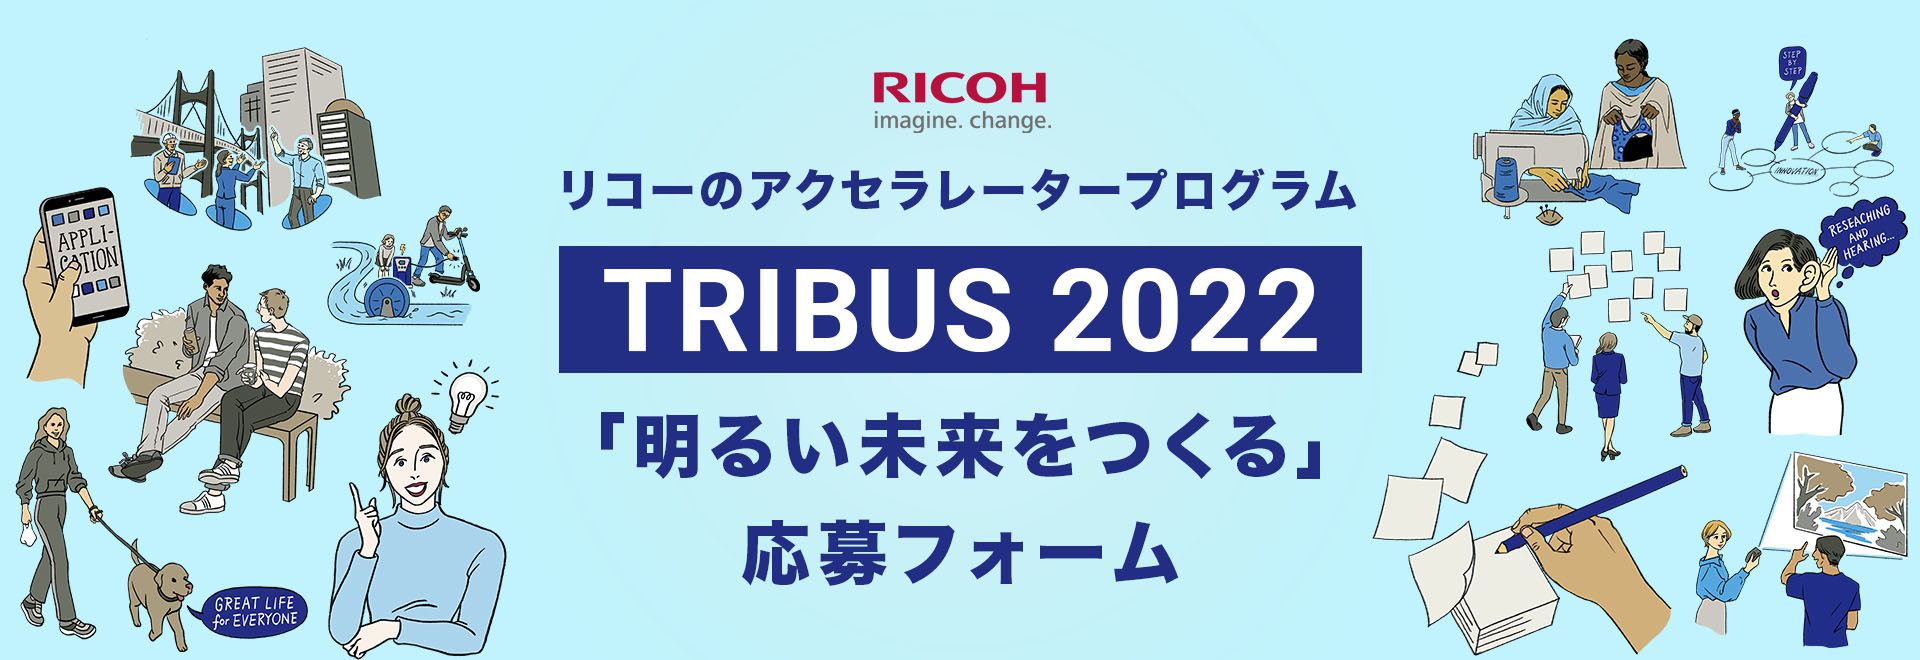 TRIBUS 2022 明るい未来をつくる 応募フォーム